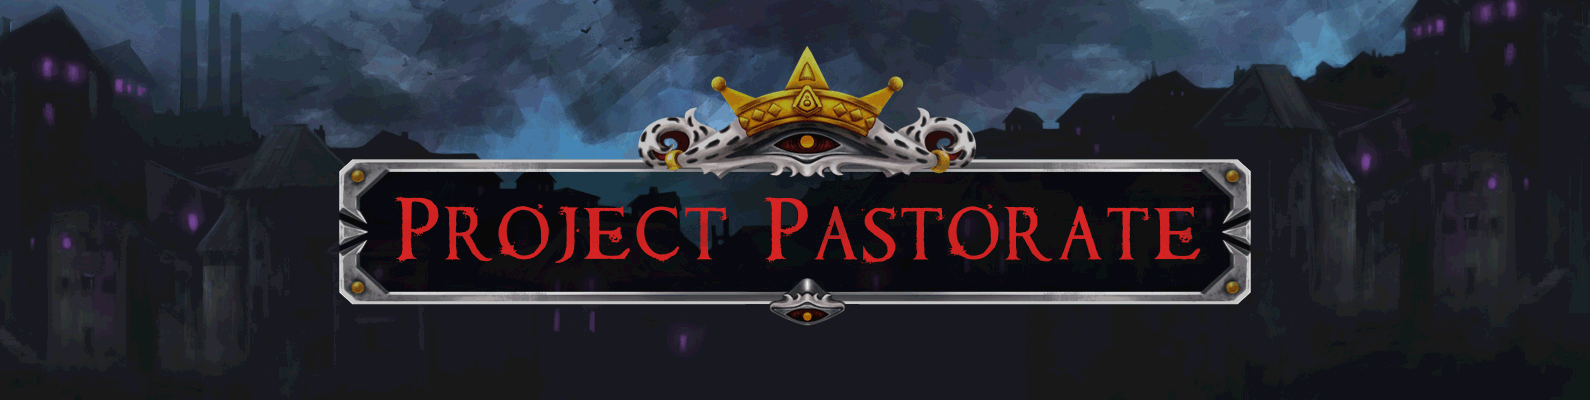 Project Pastorate (Demo)